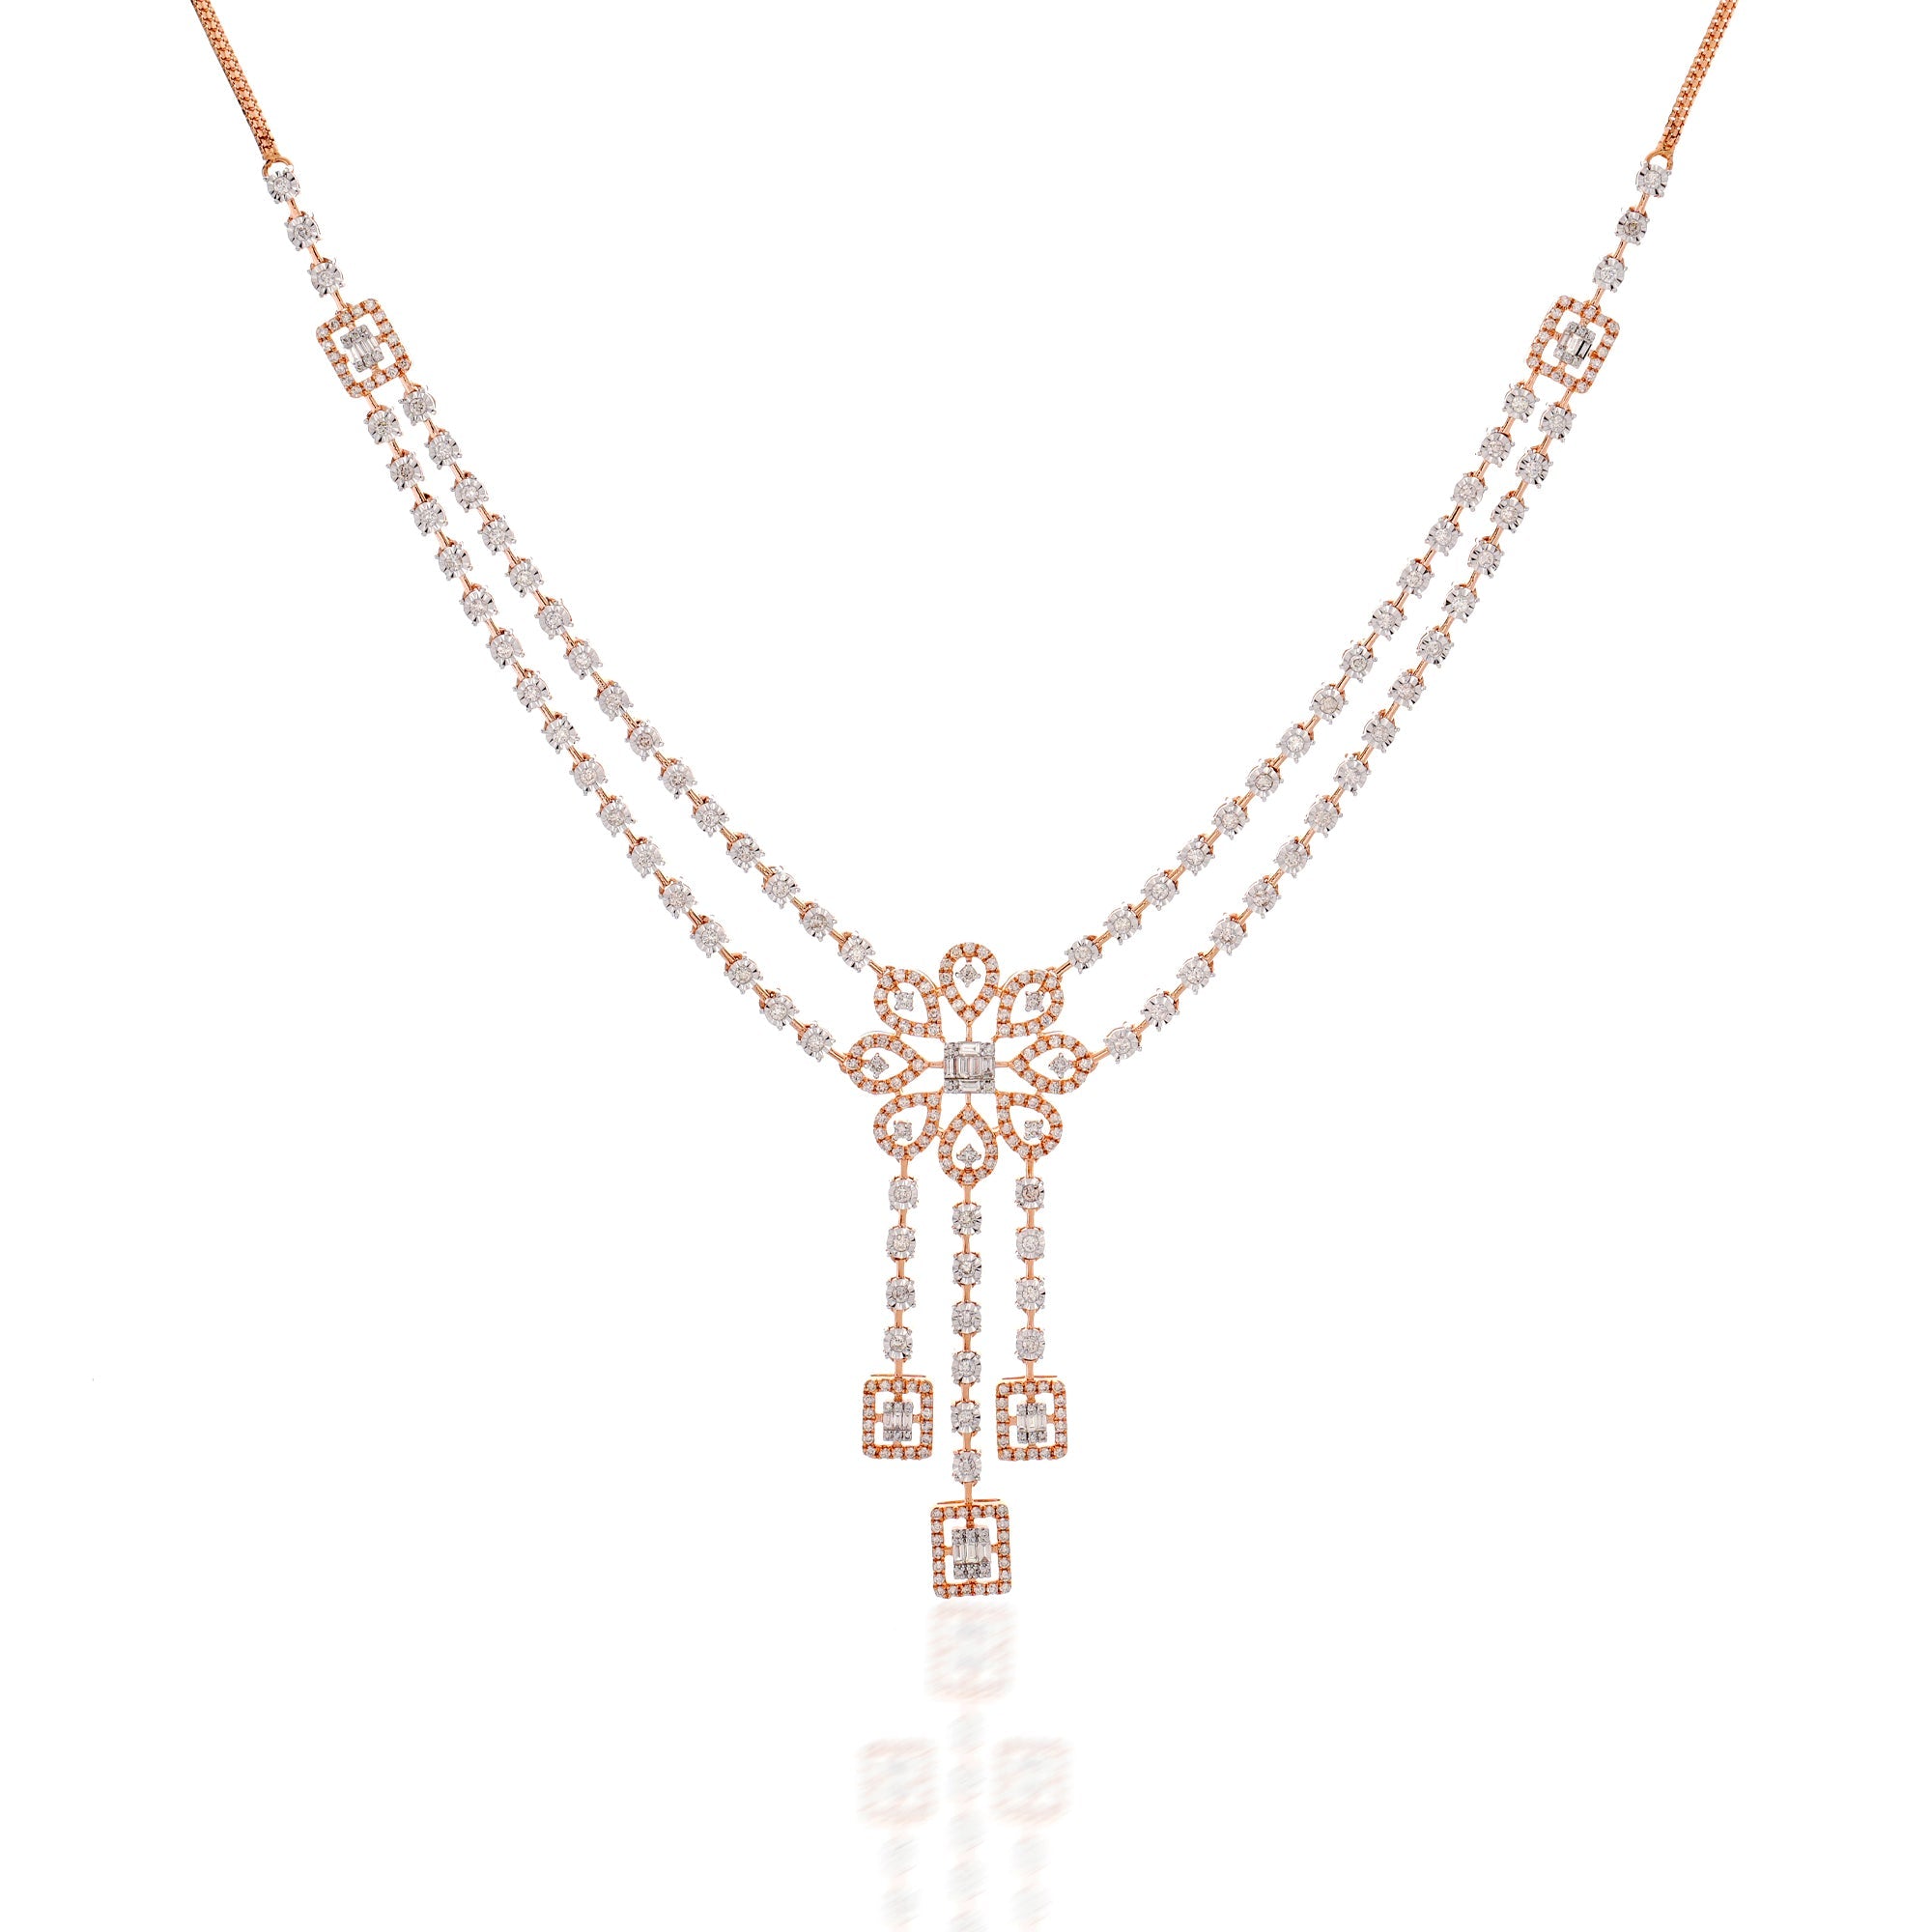 Stunning Floral Diamond Necklace Set